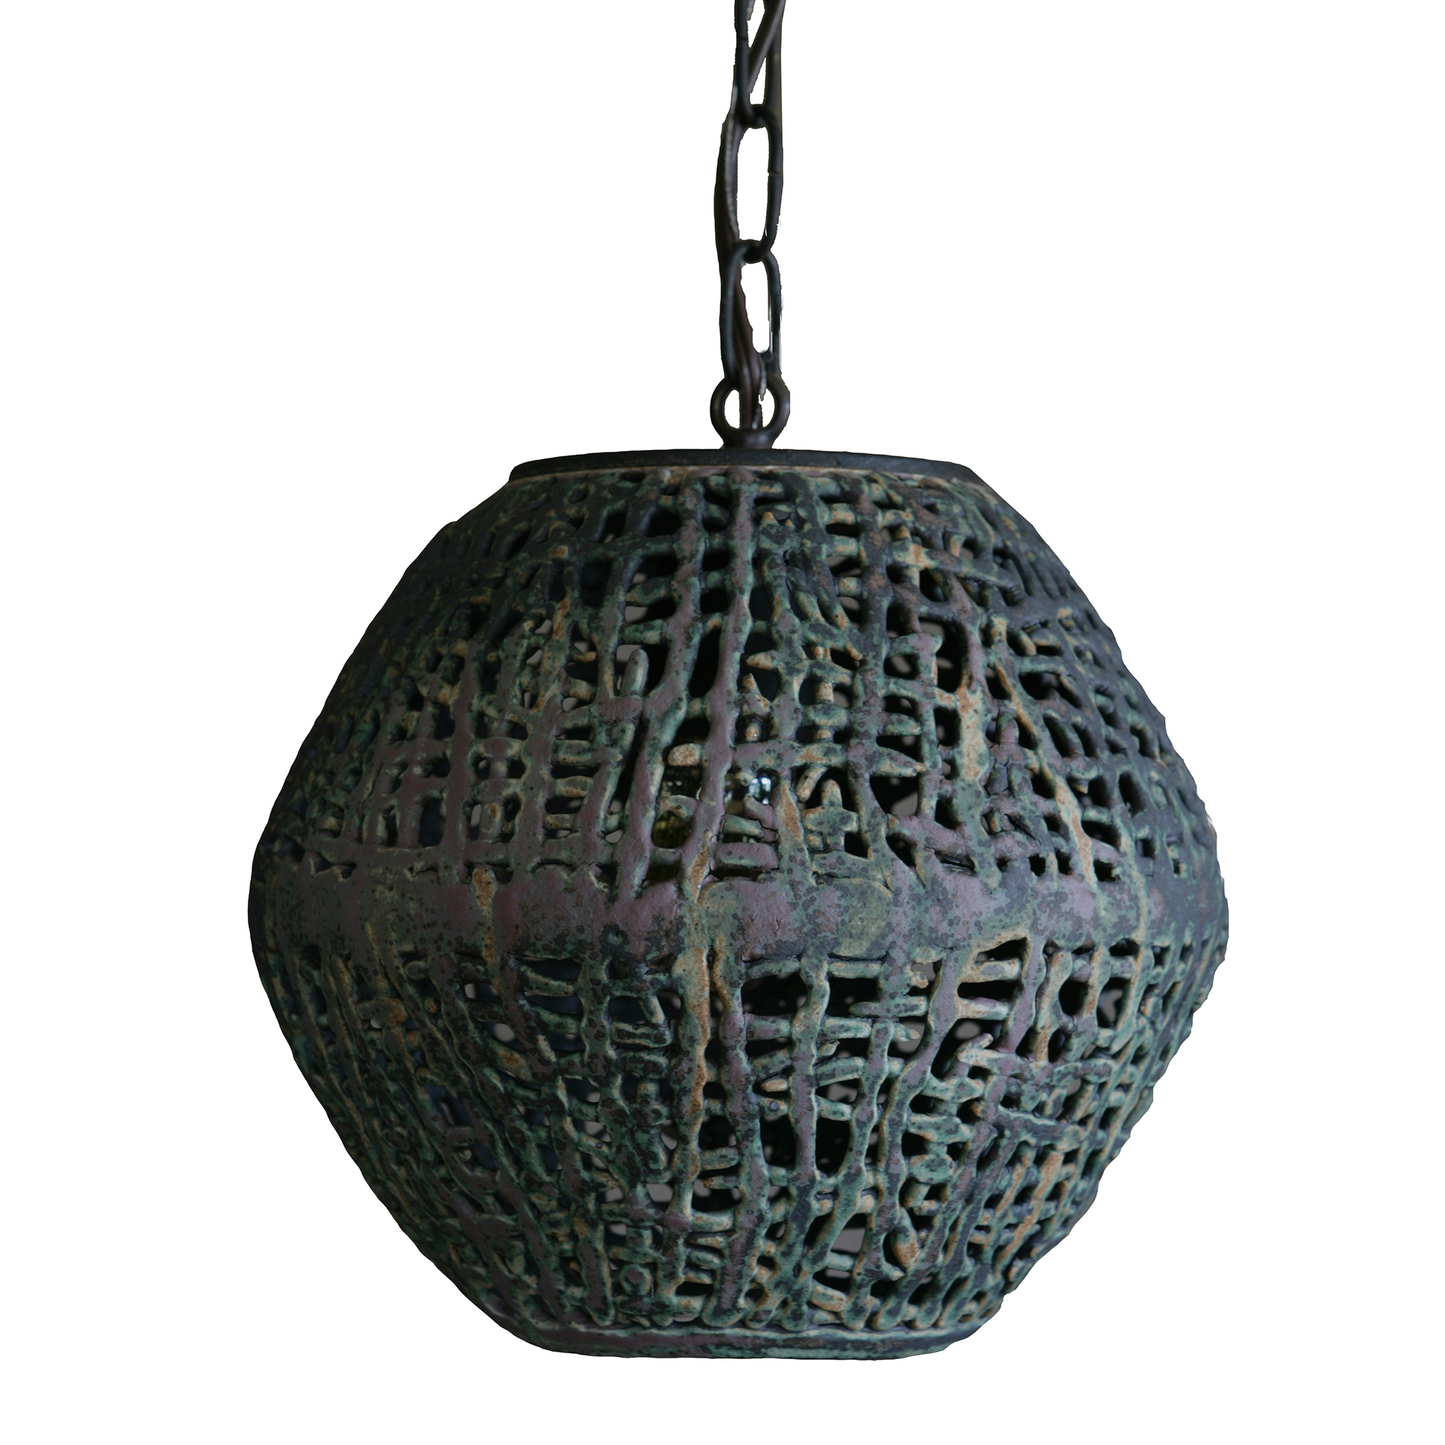 Ovoid Hanging Basketweave Pendant